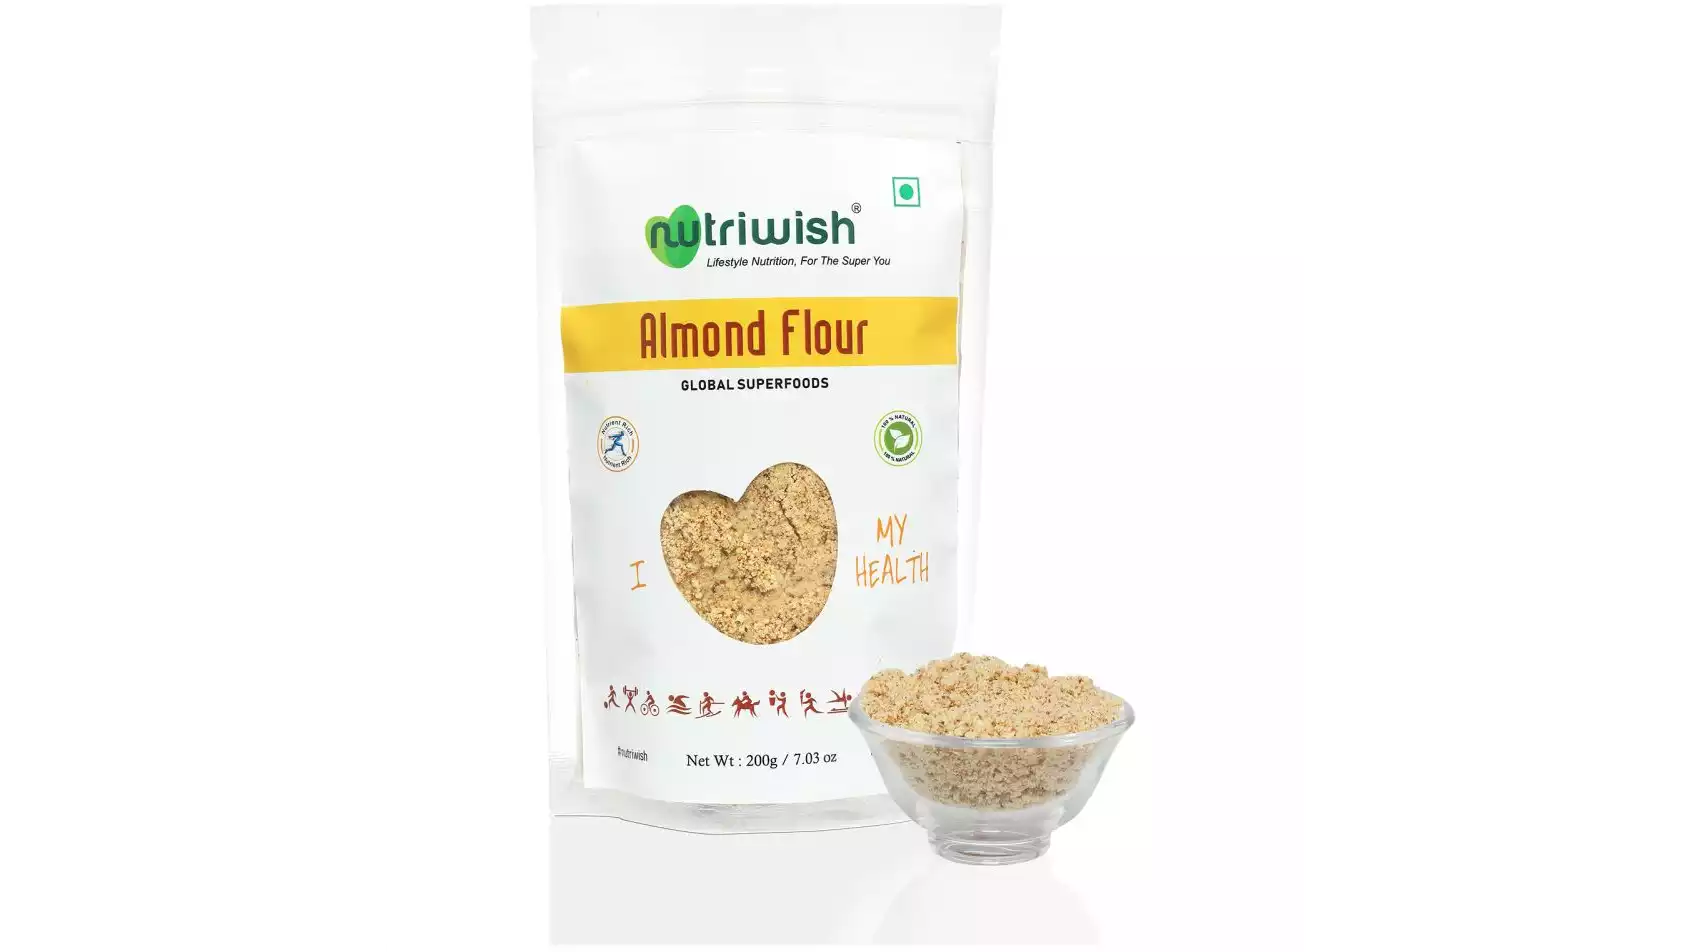 Nutriwish Almond Powder (200g)